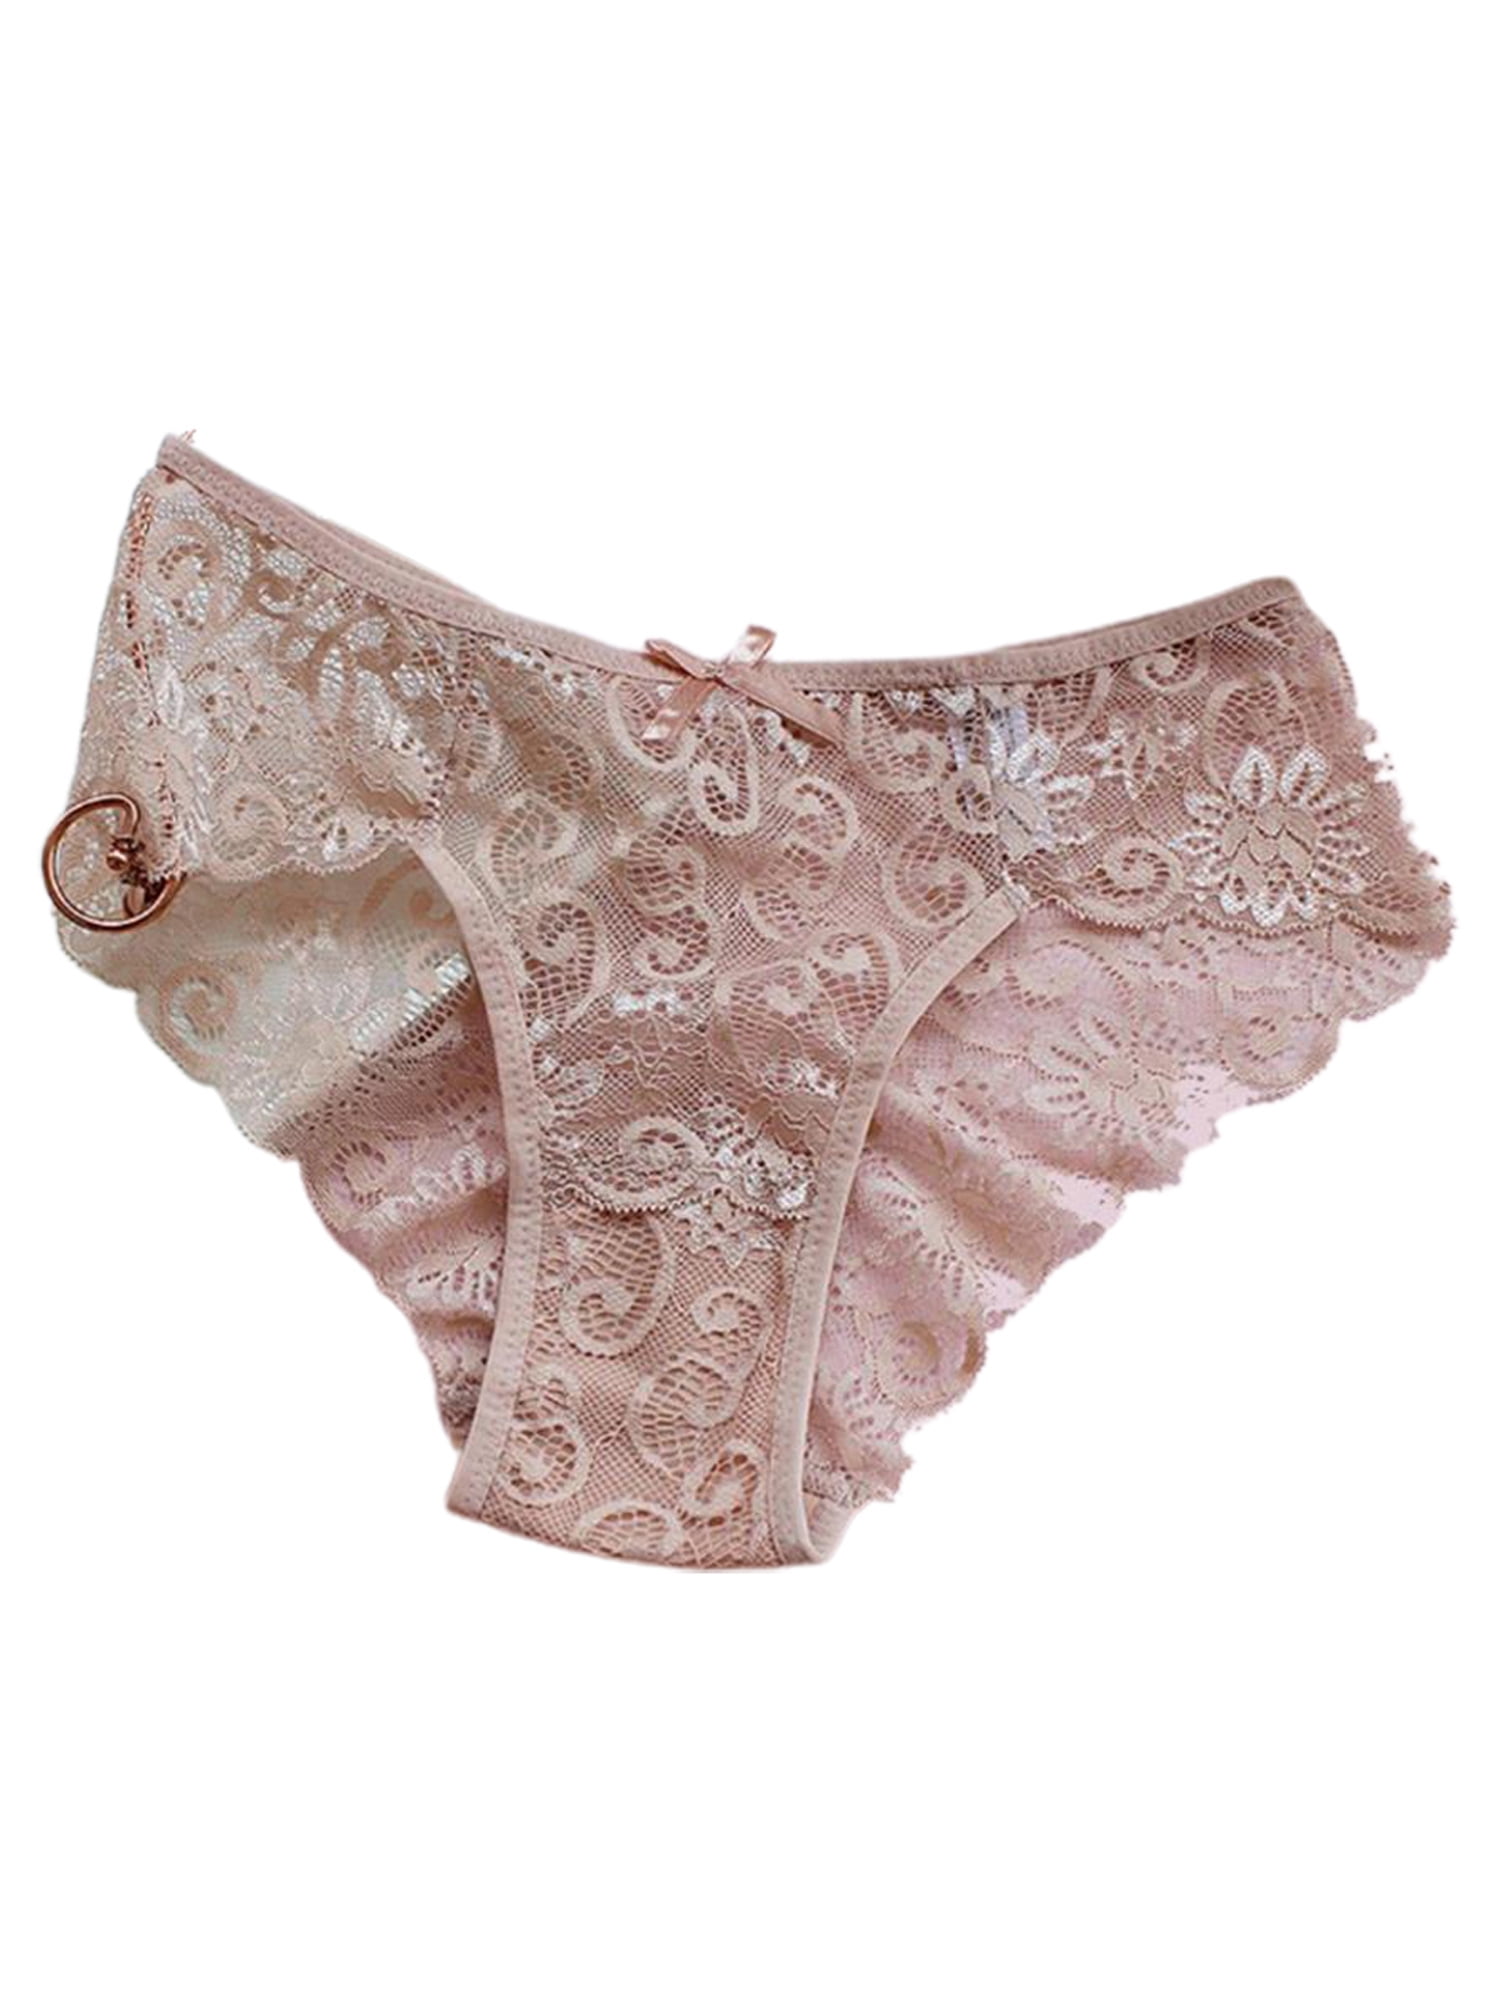 Wodstyle Womens Lace Low Rise Sheer Lingerie Briefs Underwear Panties ...